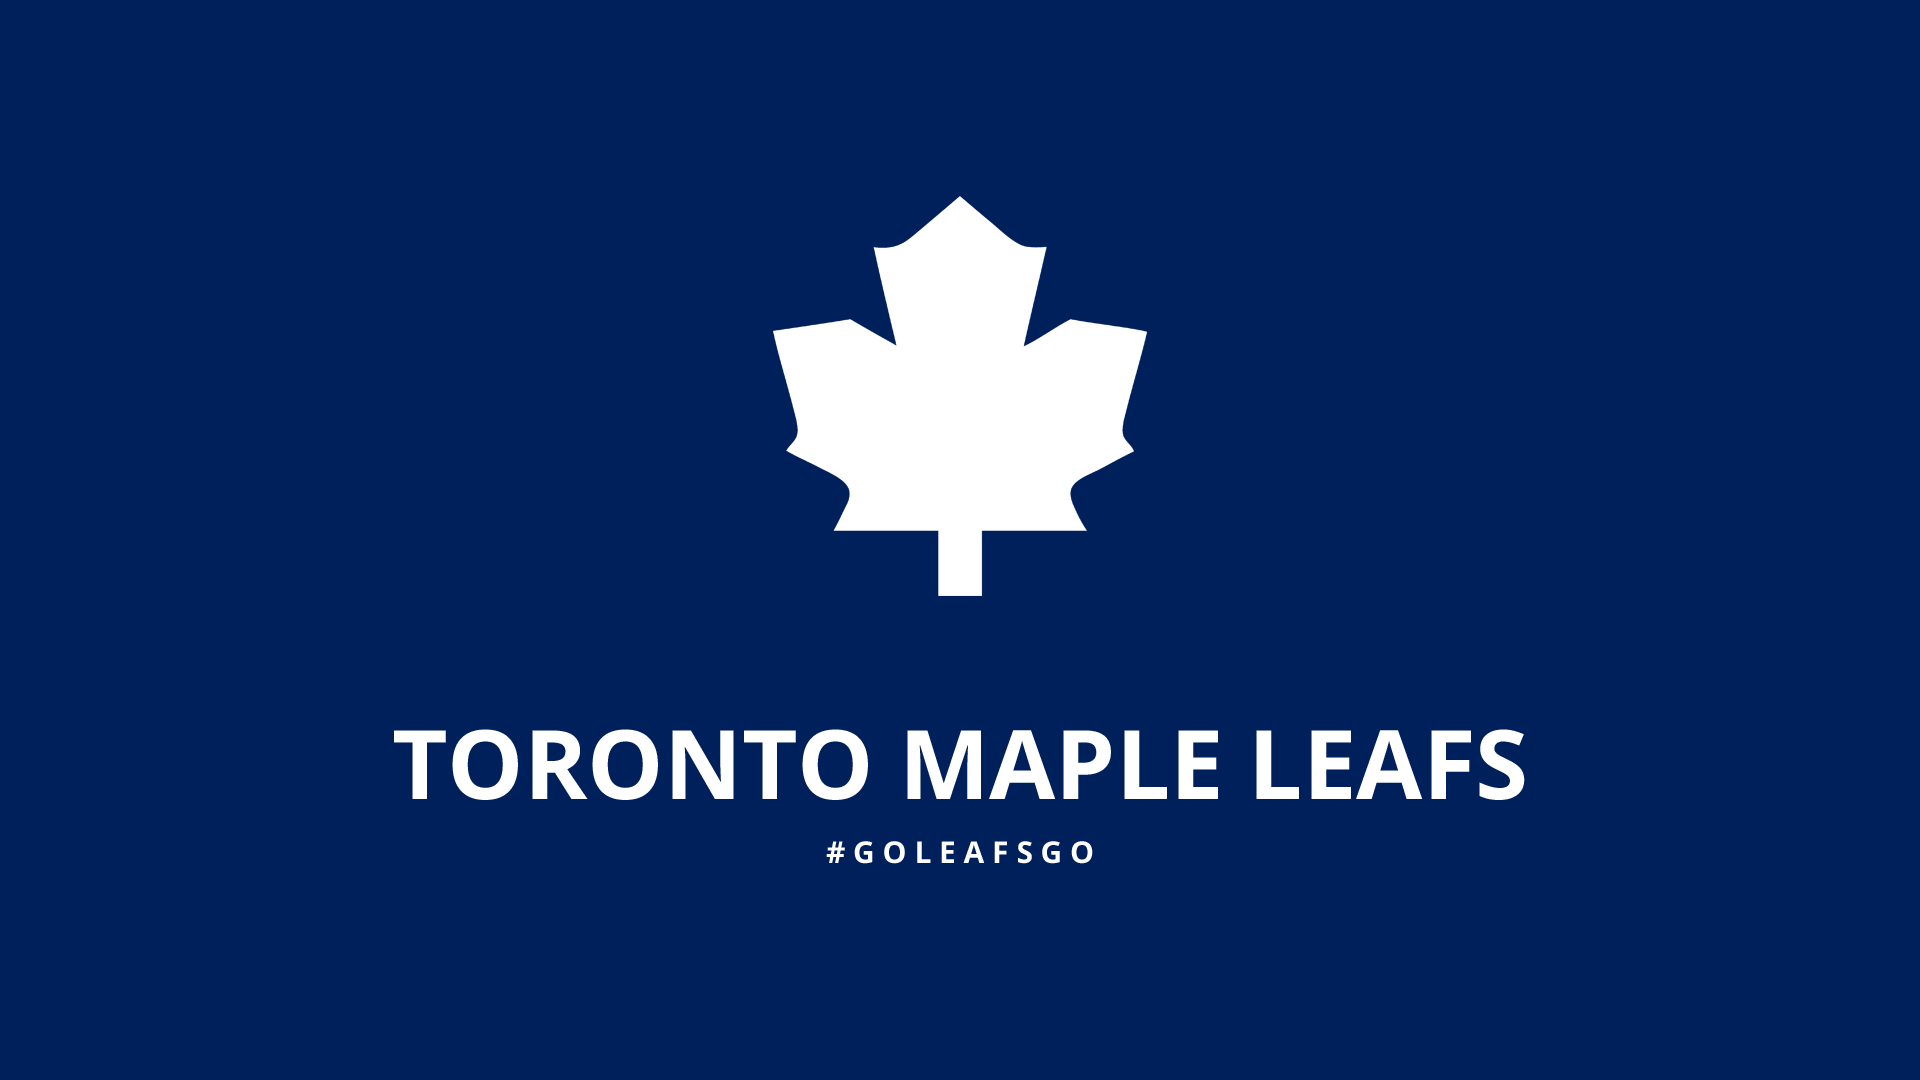 Minimalist Toronto Maple Leafs Wallpaper By Lfiore